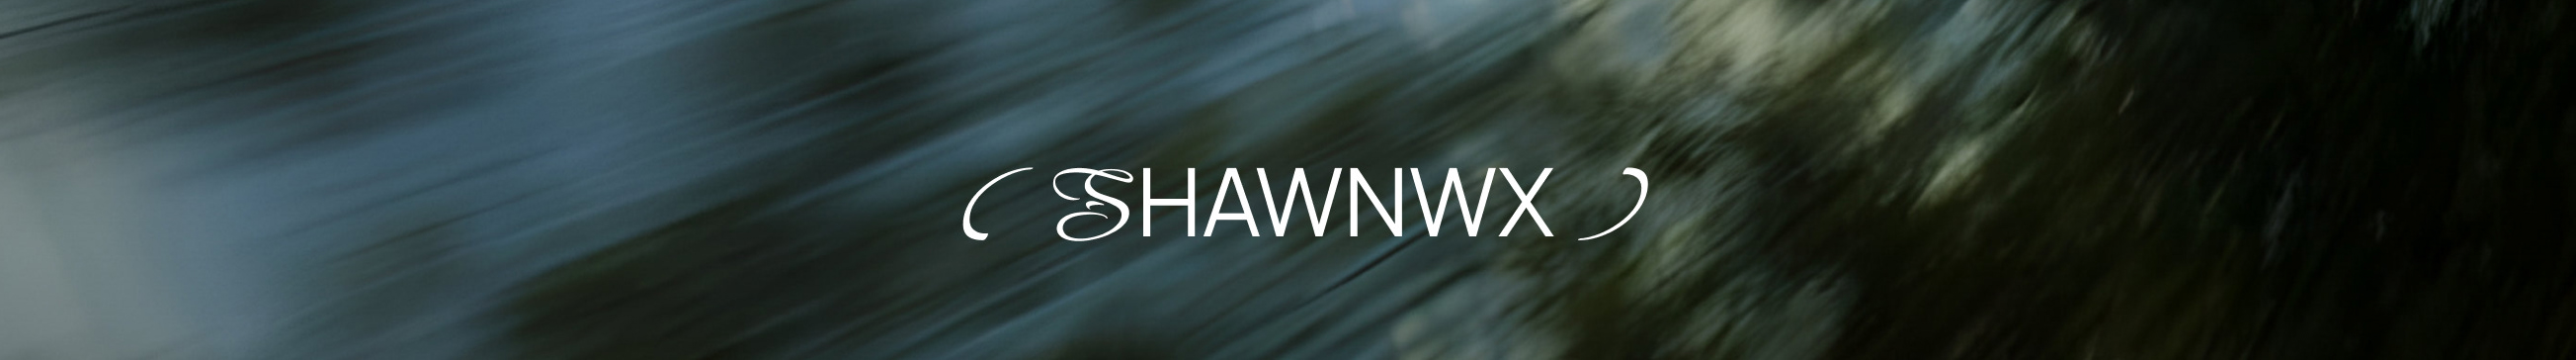 Maximus shawnWx's profile banner